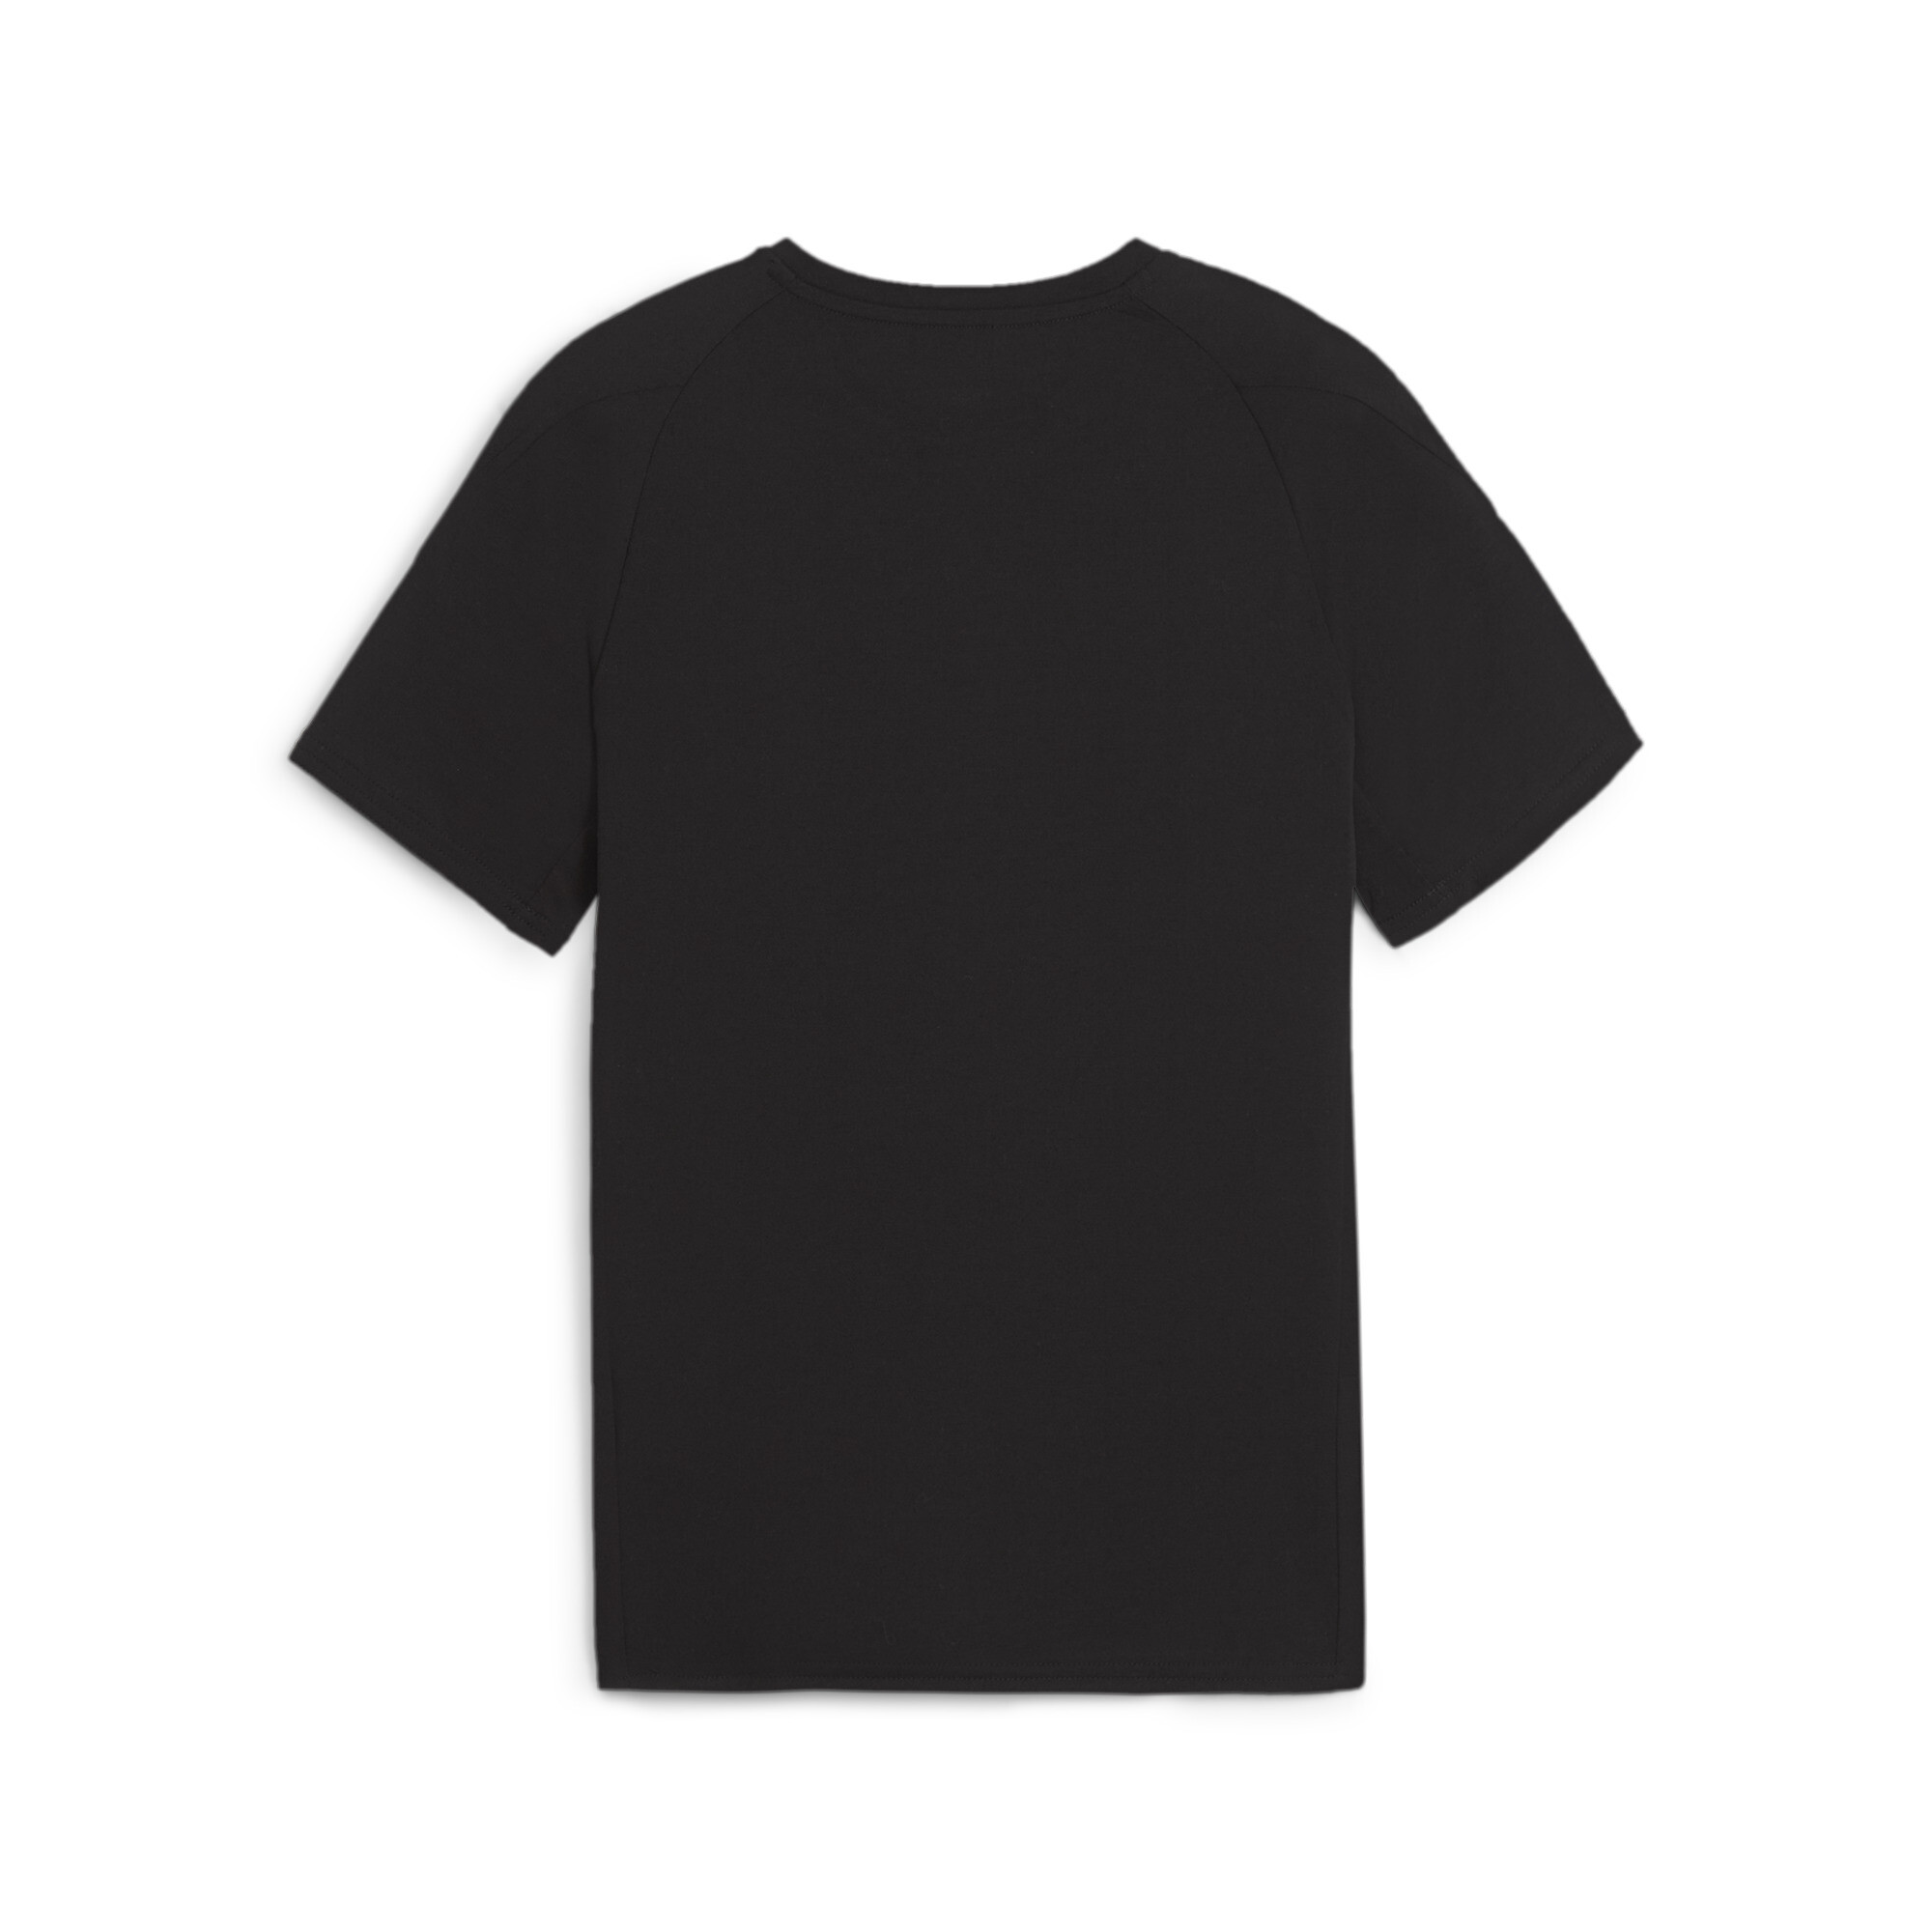 PUMA EVOSTRIPE T-Shirt In Black, Size 13-14 Youth